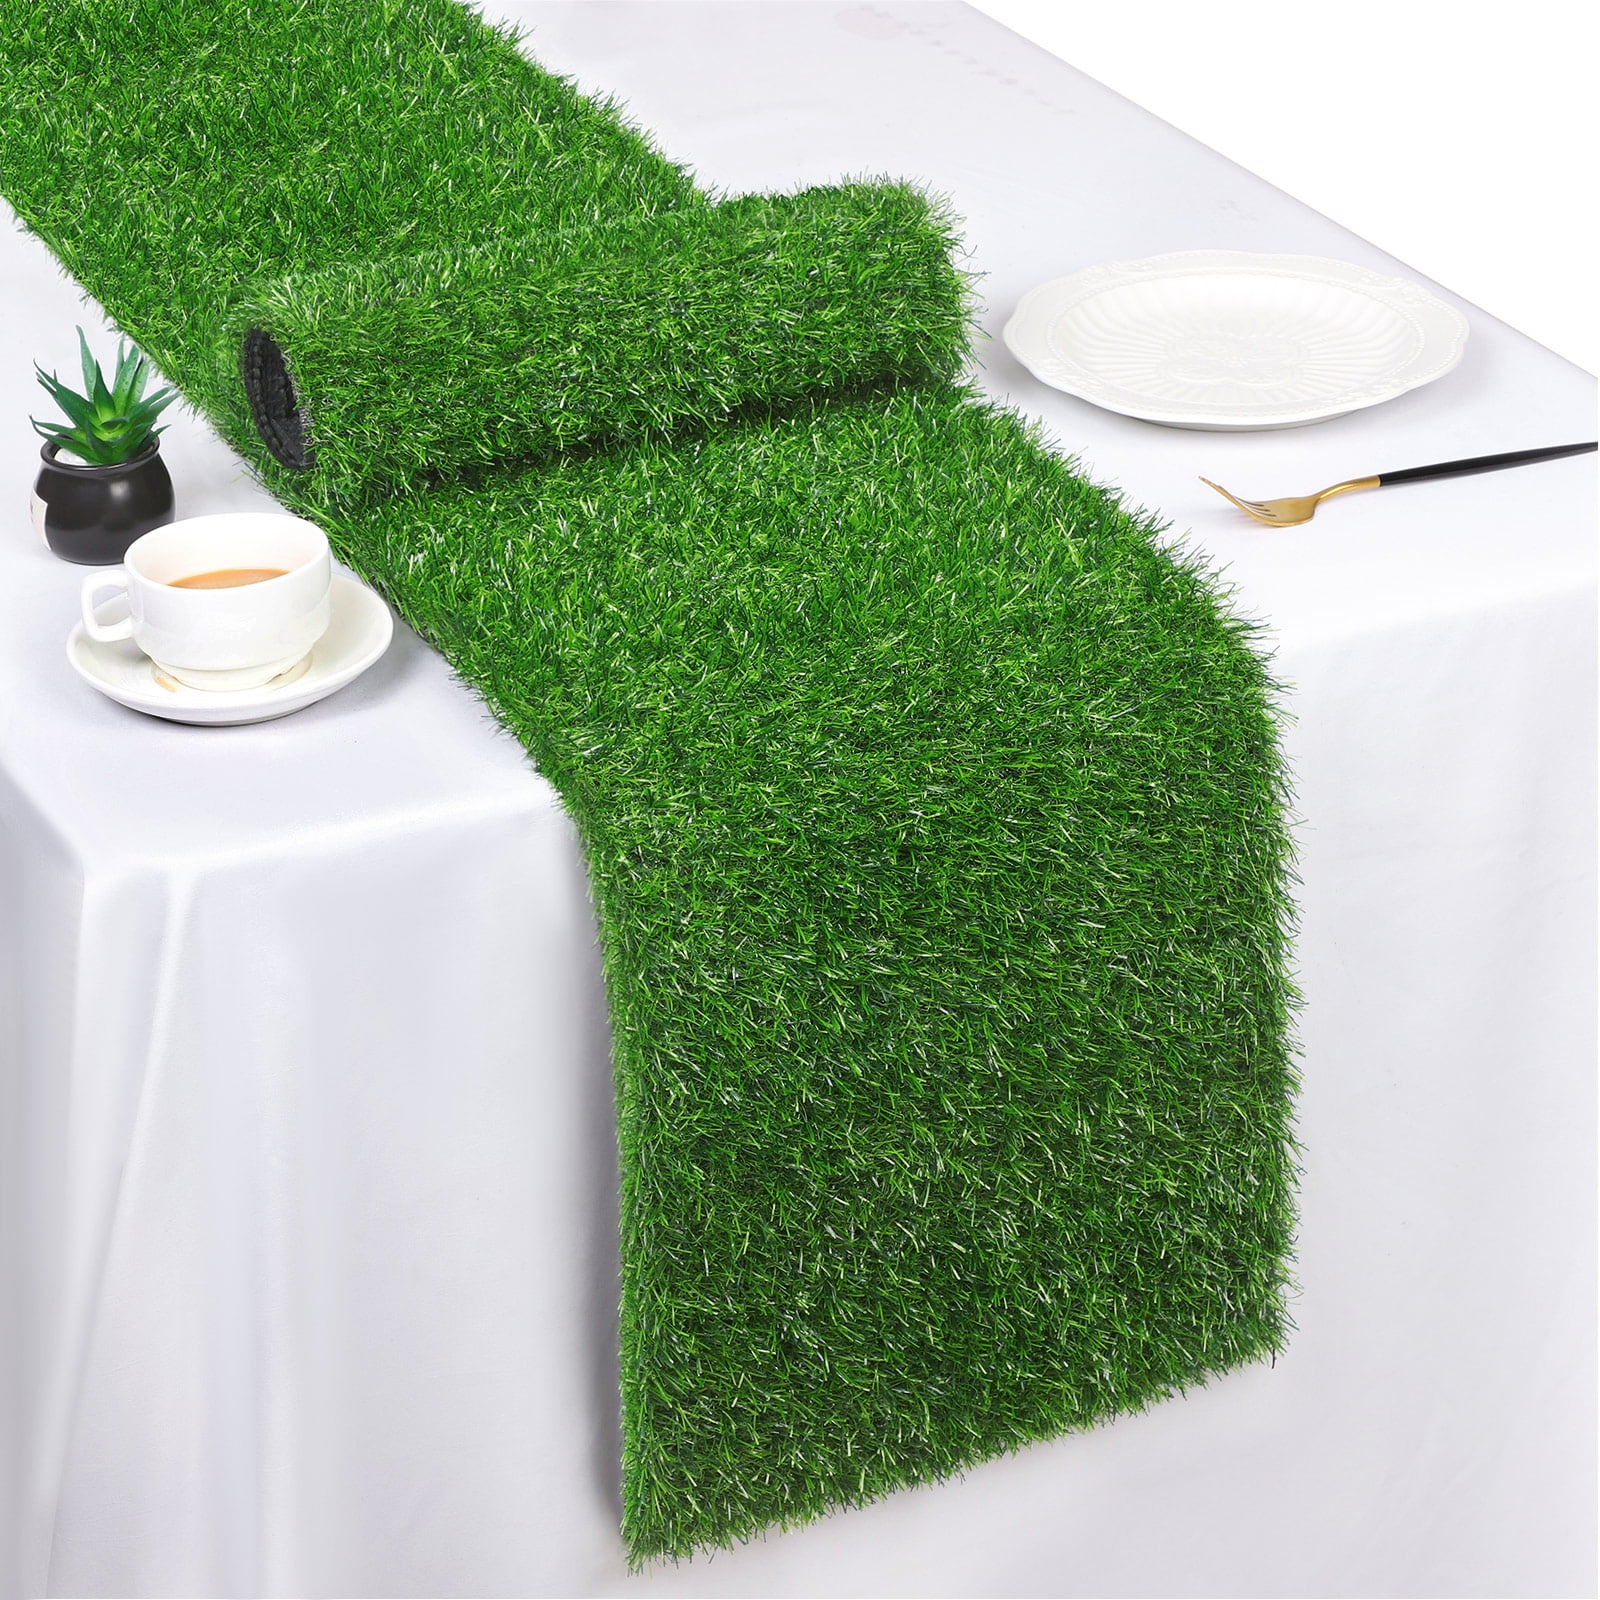  Kesfey Artificial Grass Table Runner 14 x 48 Inch